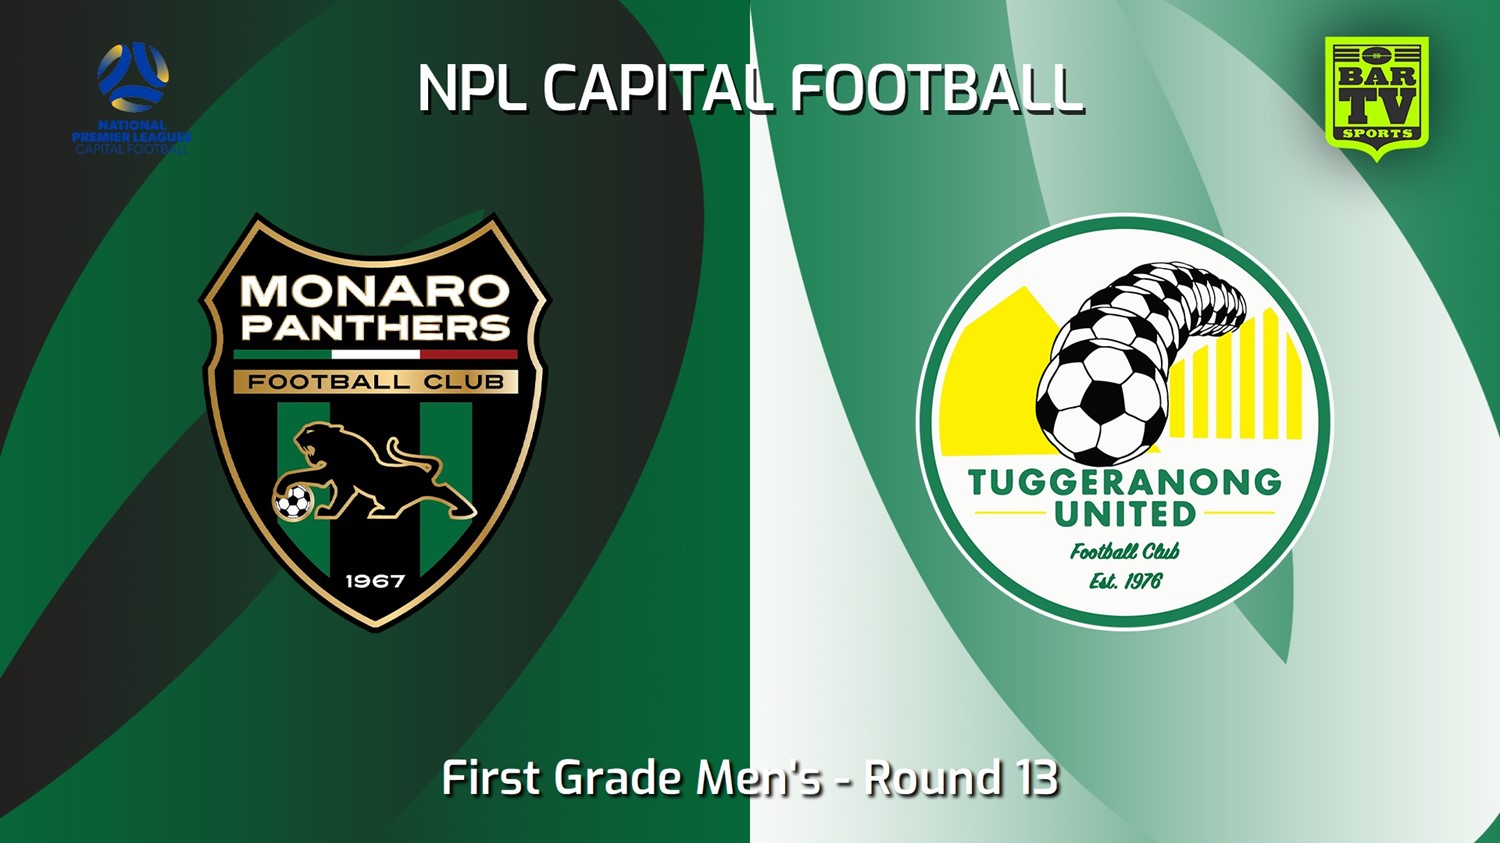 240629-video-Capital NPL Round 13 - Monaro Panthers v Tuggeranong United Minigame Slate Image